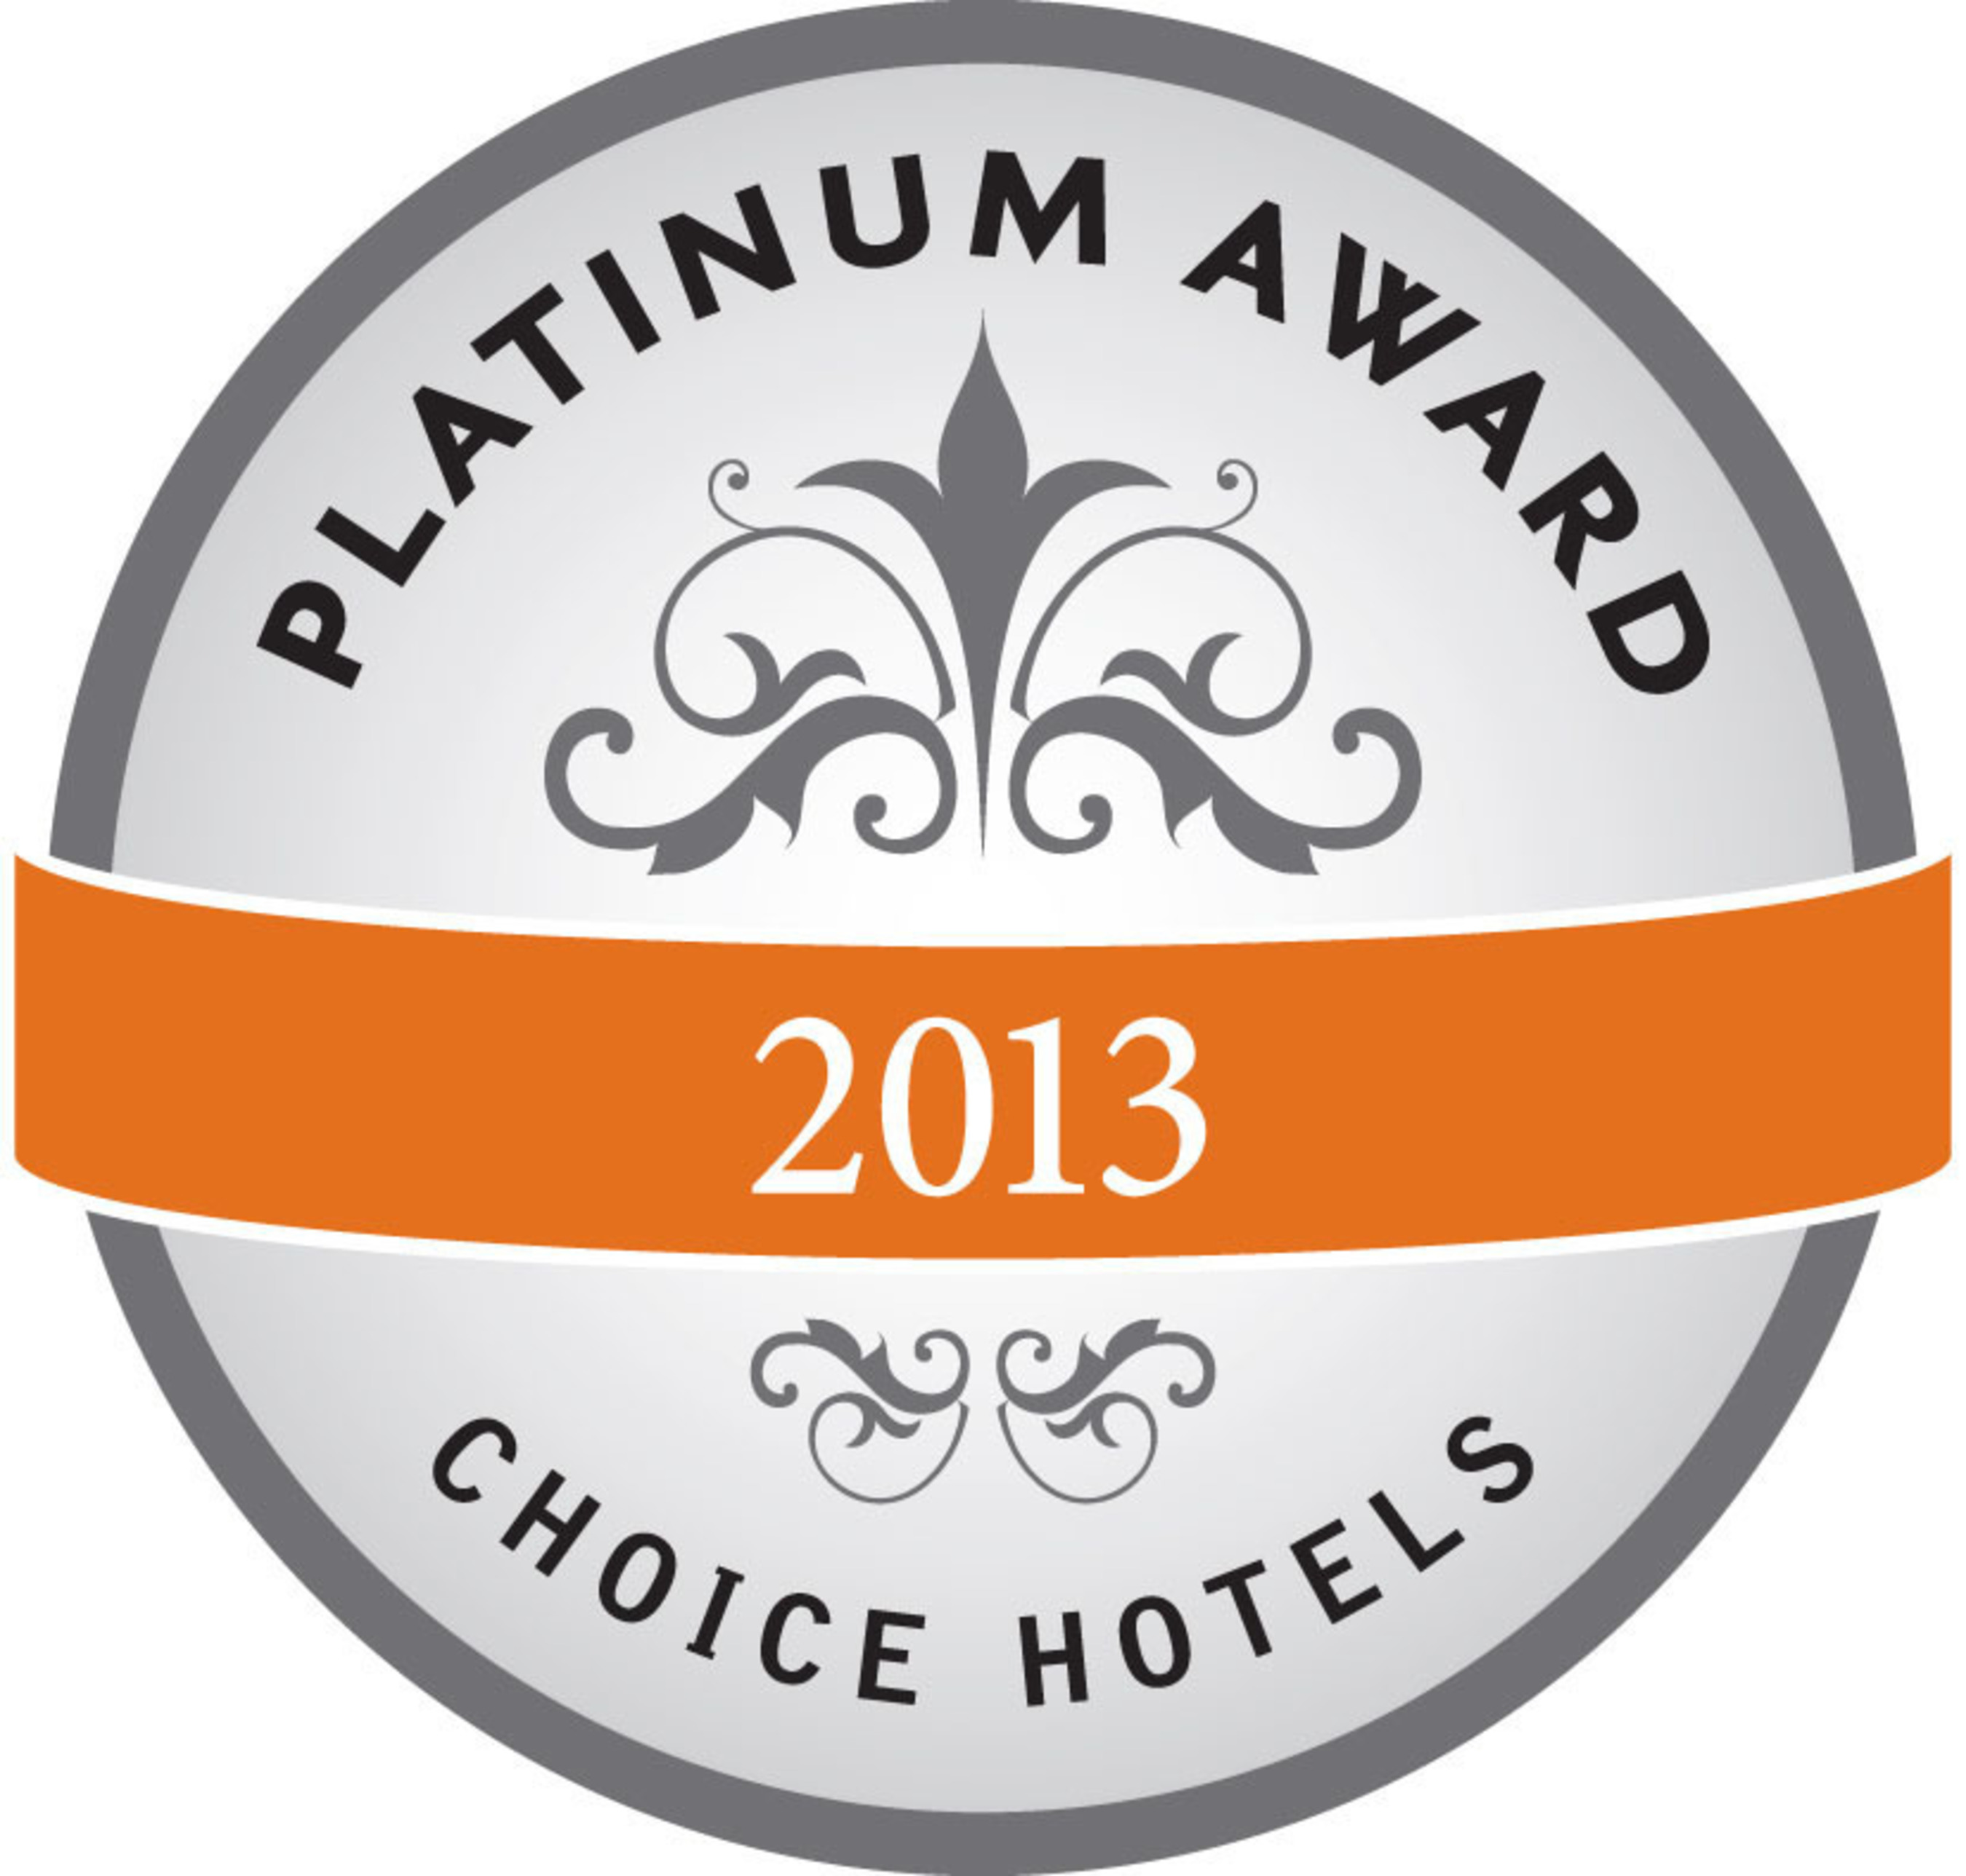 Choice Hotels Platinum Award. (PRNewsFoto/Choice Hotels International, Inc)